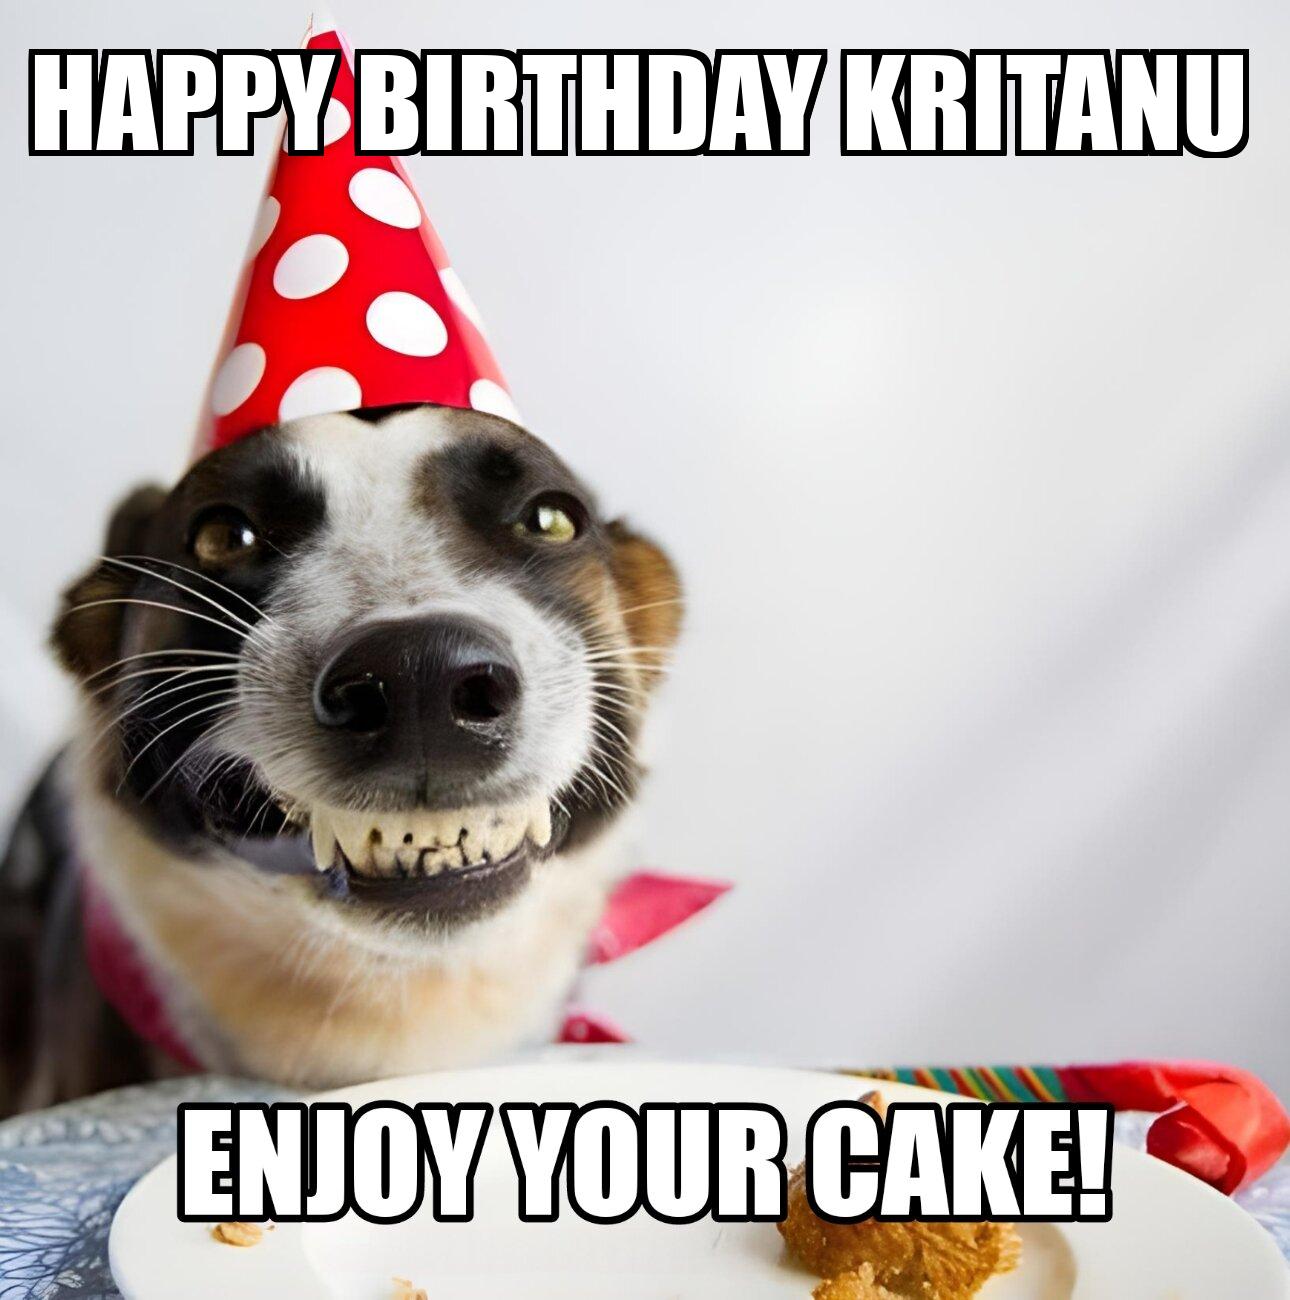 Happy Birthday Kritanu Enjoy Your Cake Dog Meme